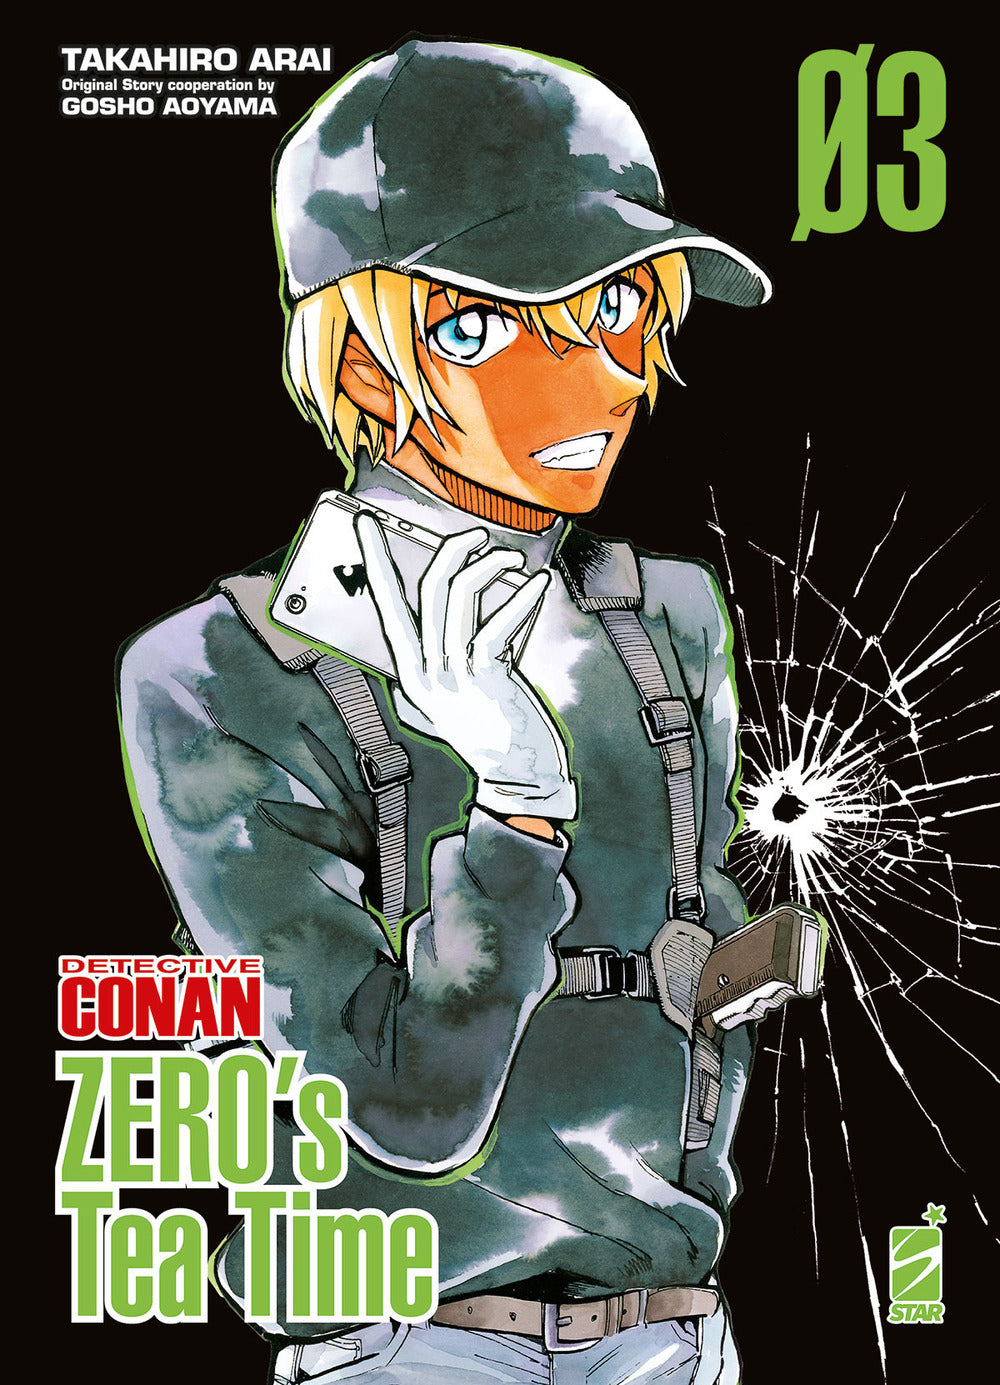 Detective Conan. Zero's tea time. Vol. 3.